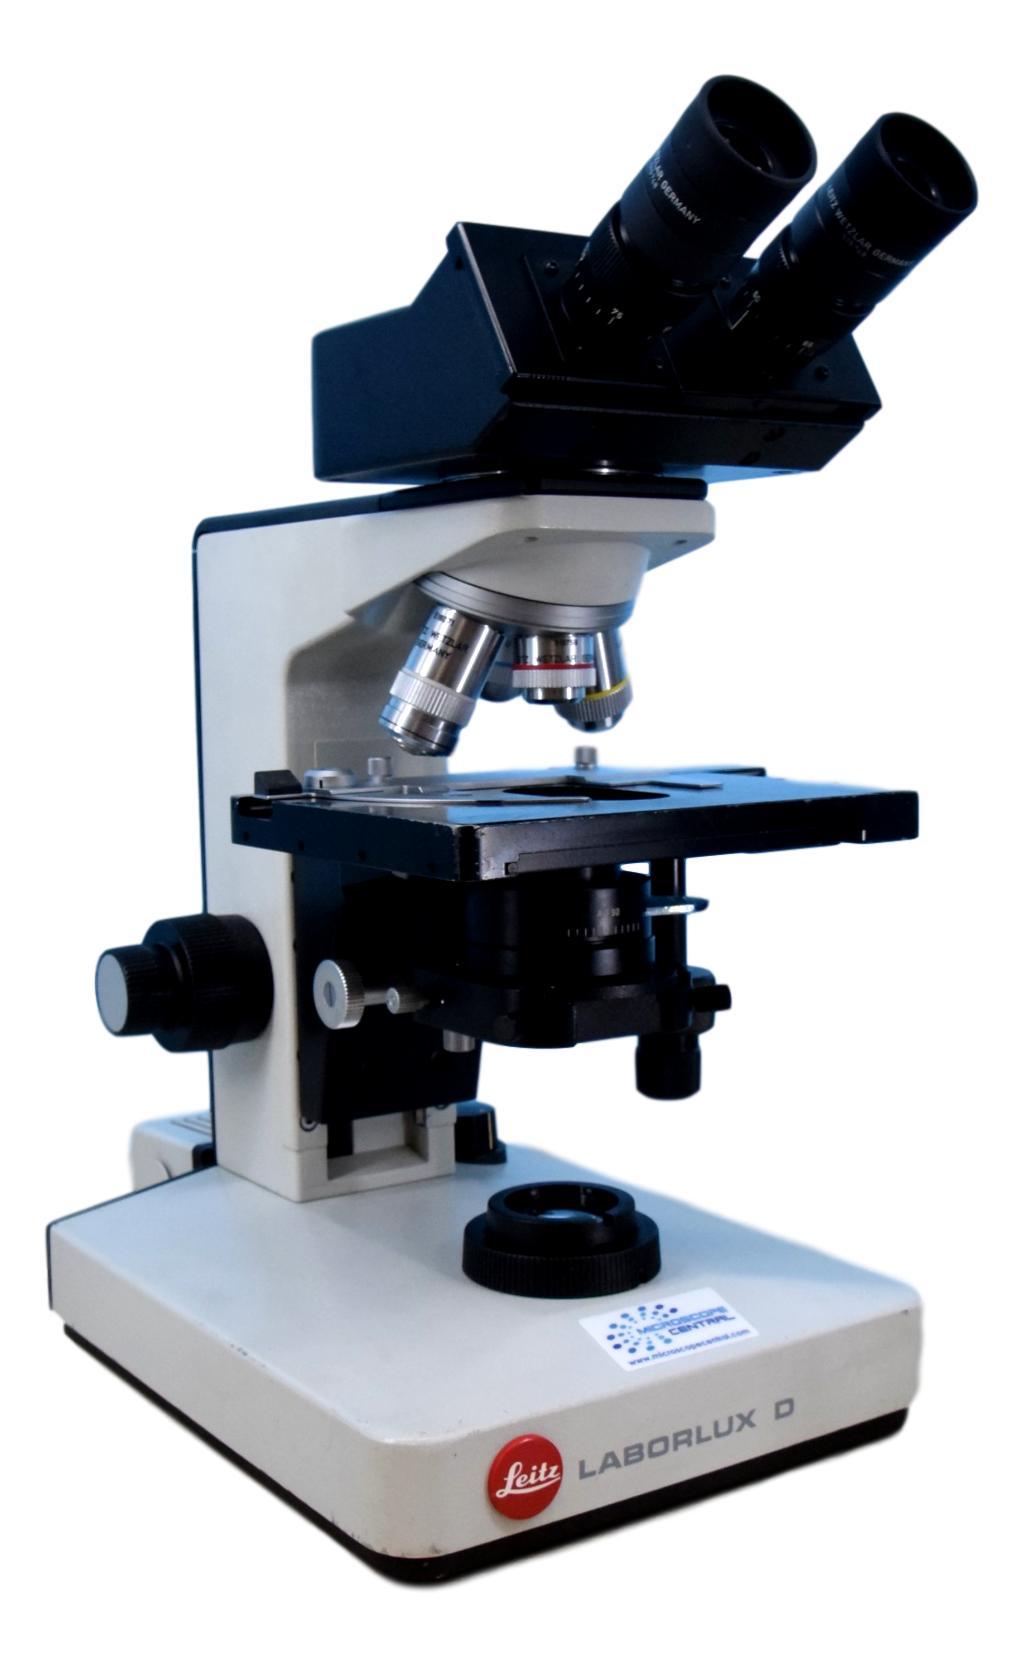 Leitz Laborlux D Microscope